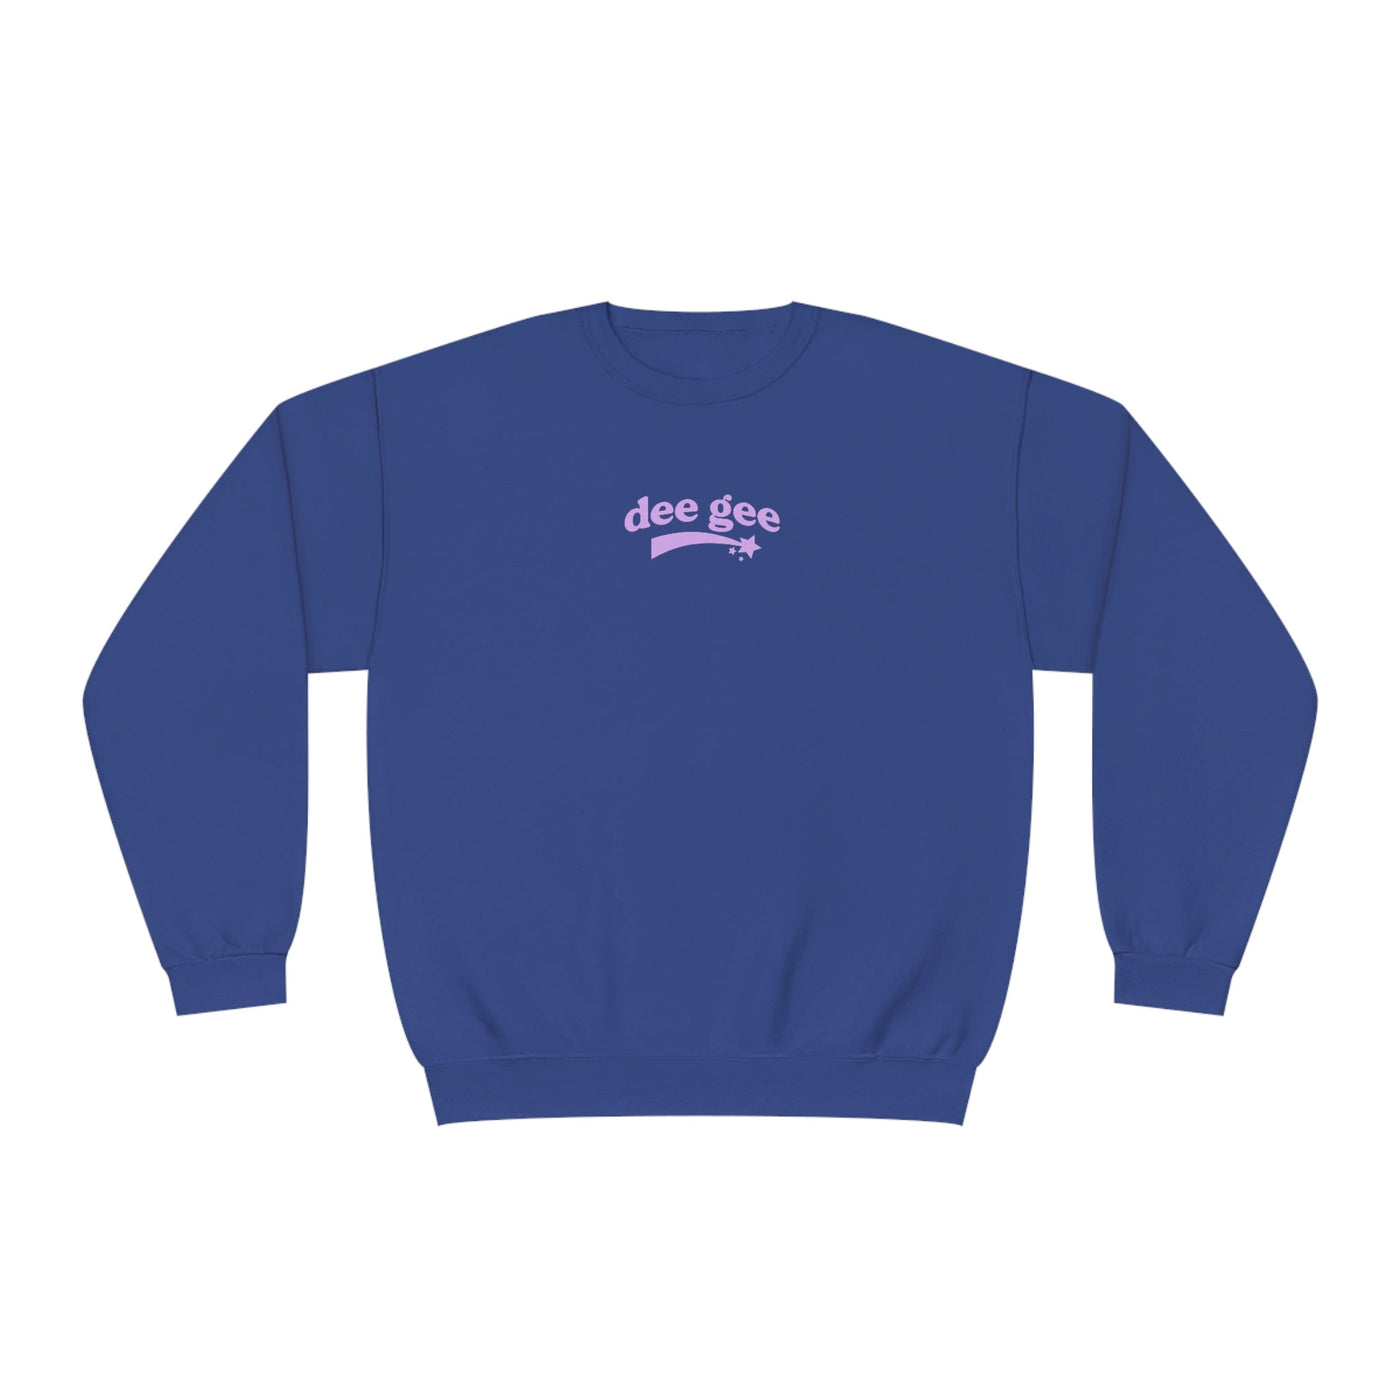 Delta Gamma Crewneck Sweatshirt | Be Kind to the Planet Trendy Sorority Crewneck